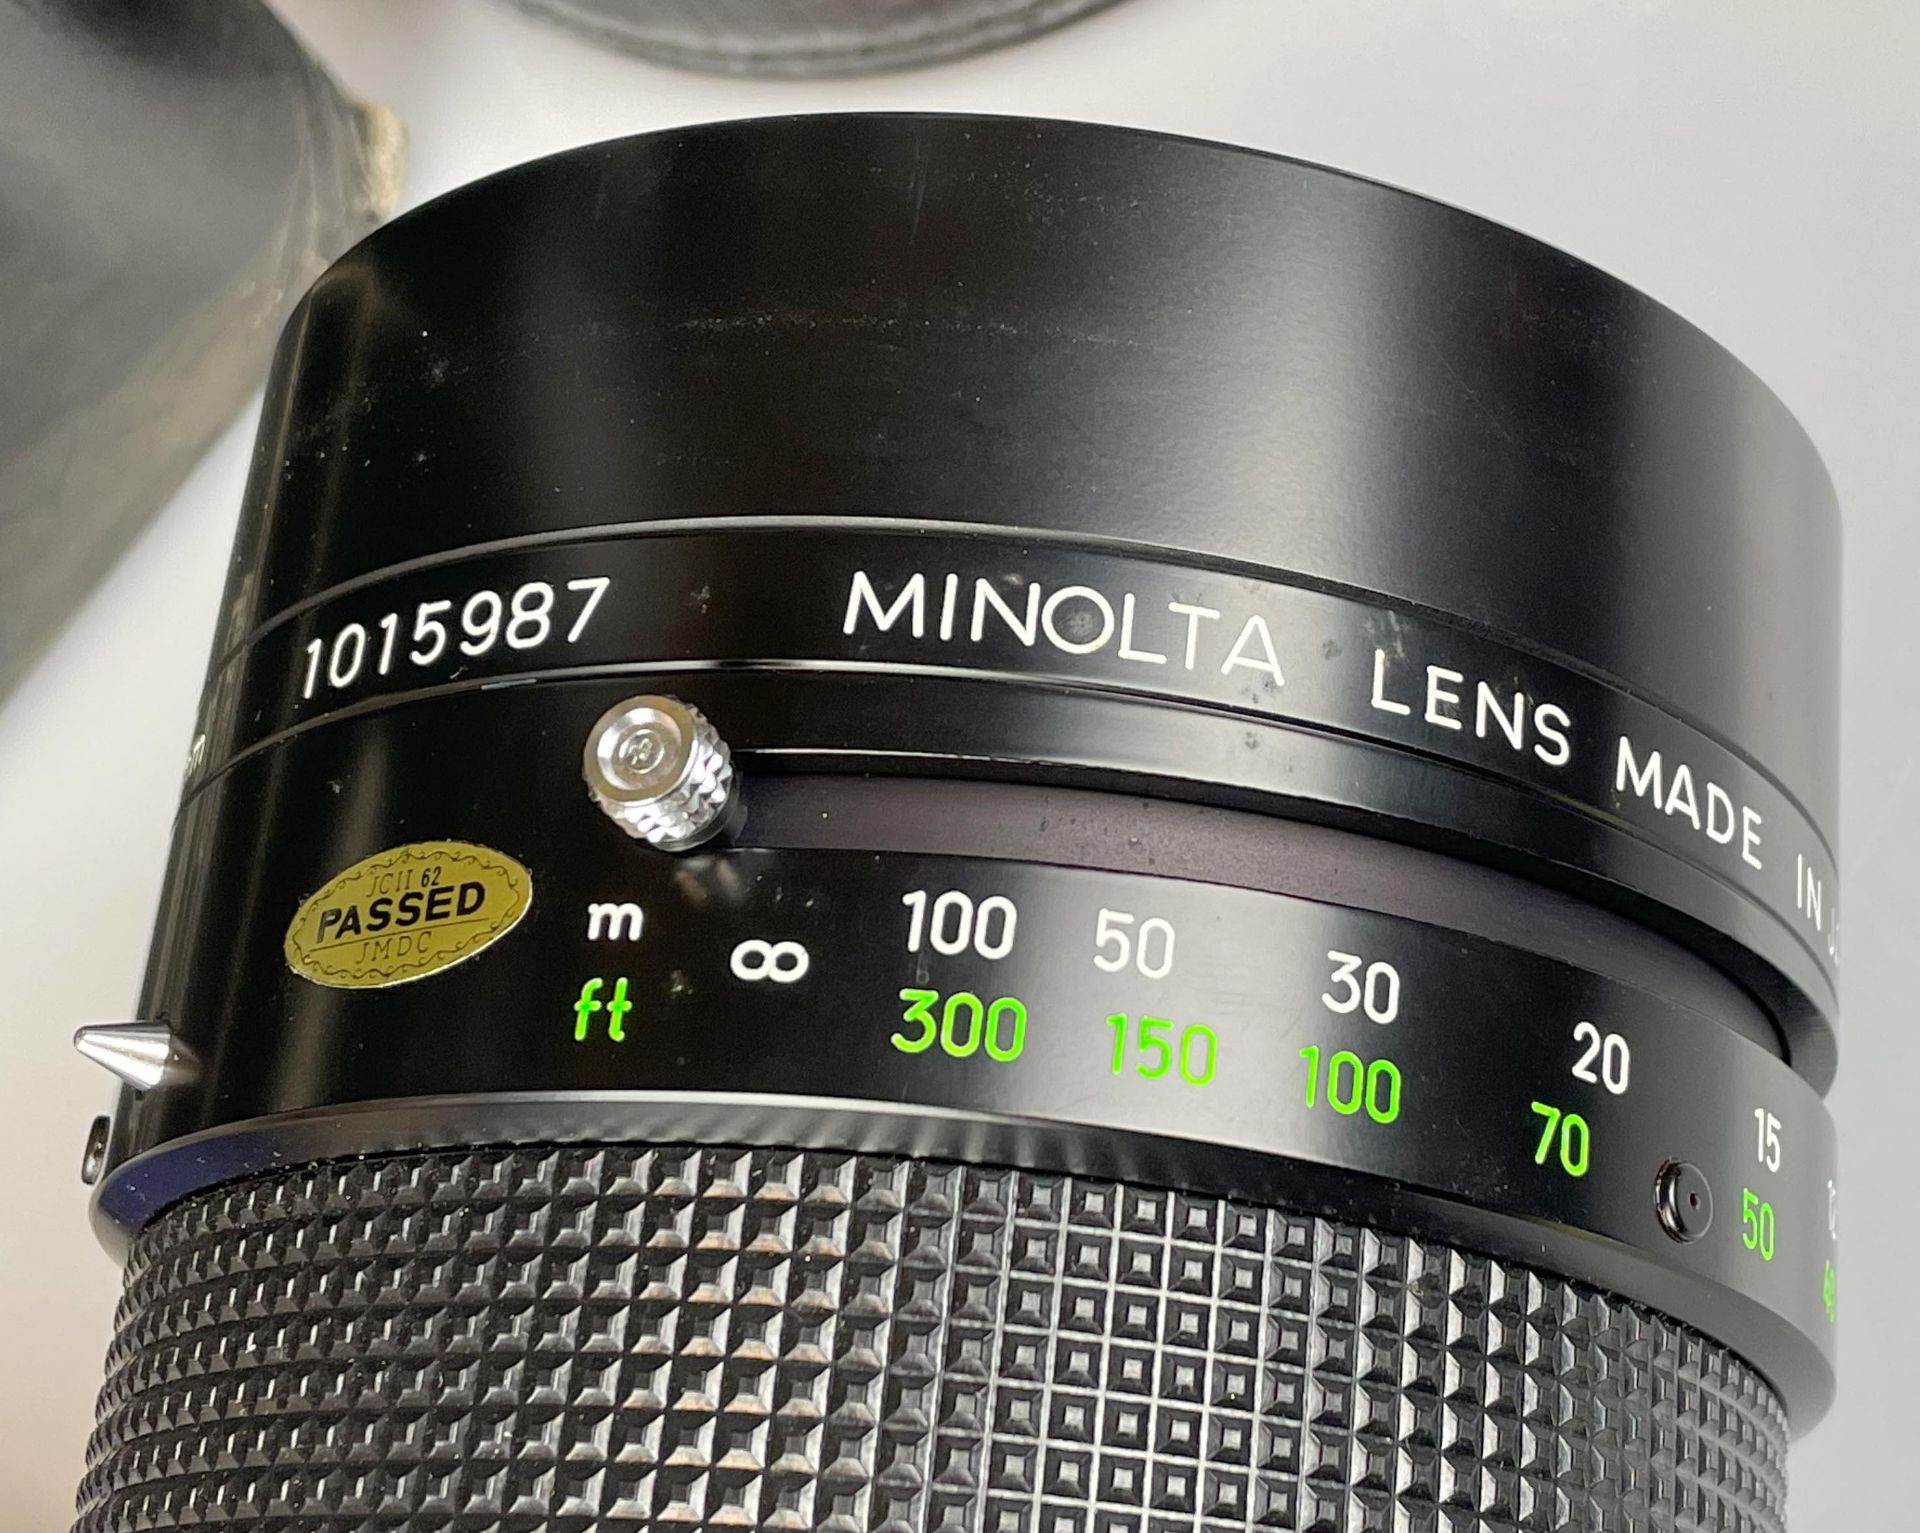 Seltene RF Rokkor-X Minolta MD 800/8 800mm f8 Spiegel Objektiv. - Bild 6 aus 9